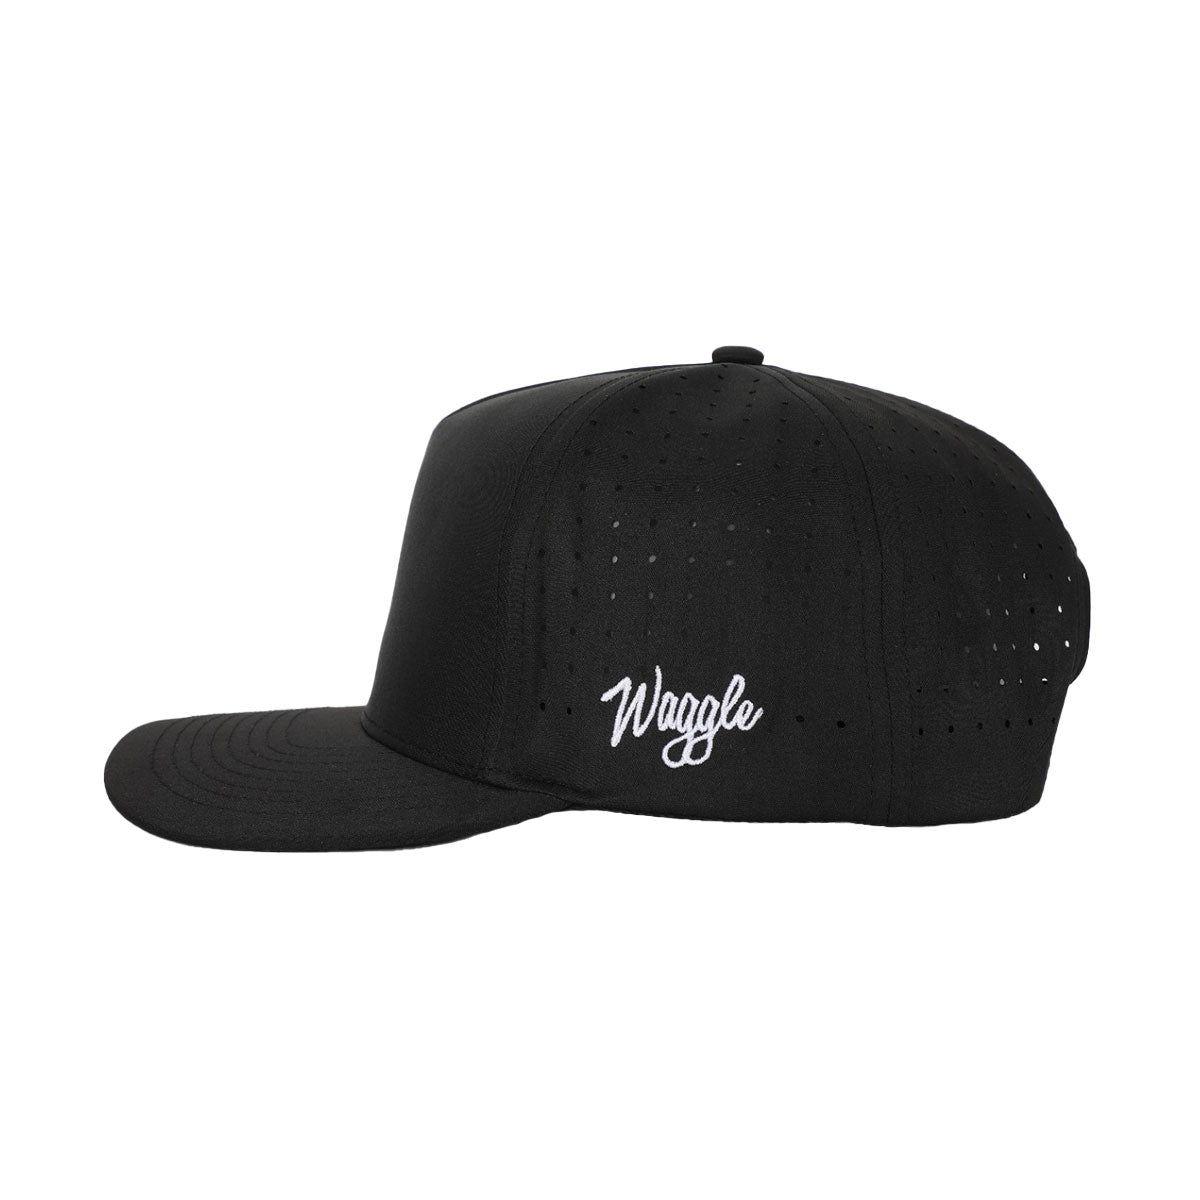 Waggle Black Hat - Sample